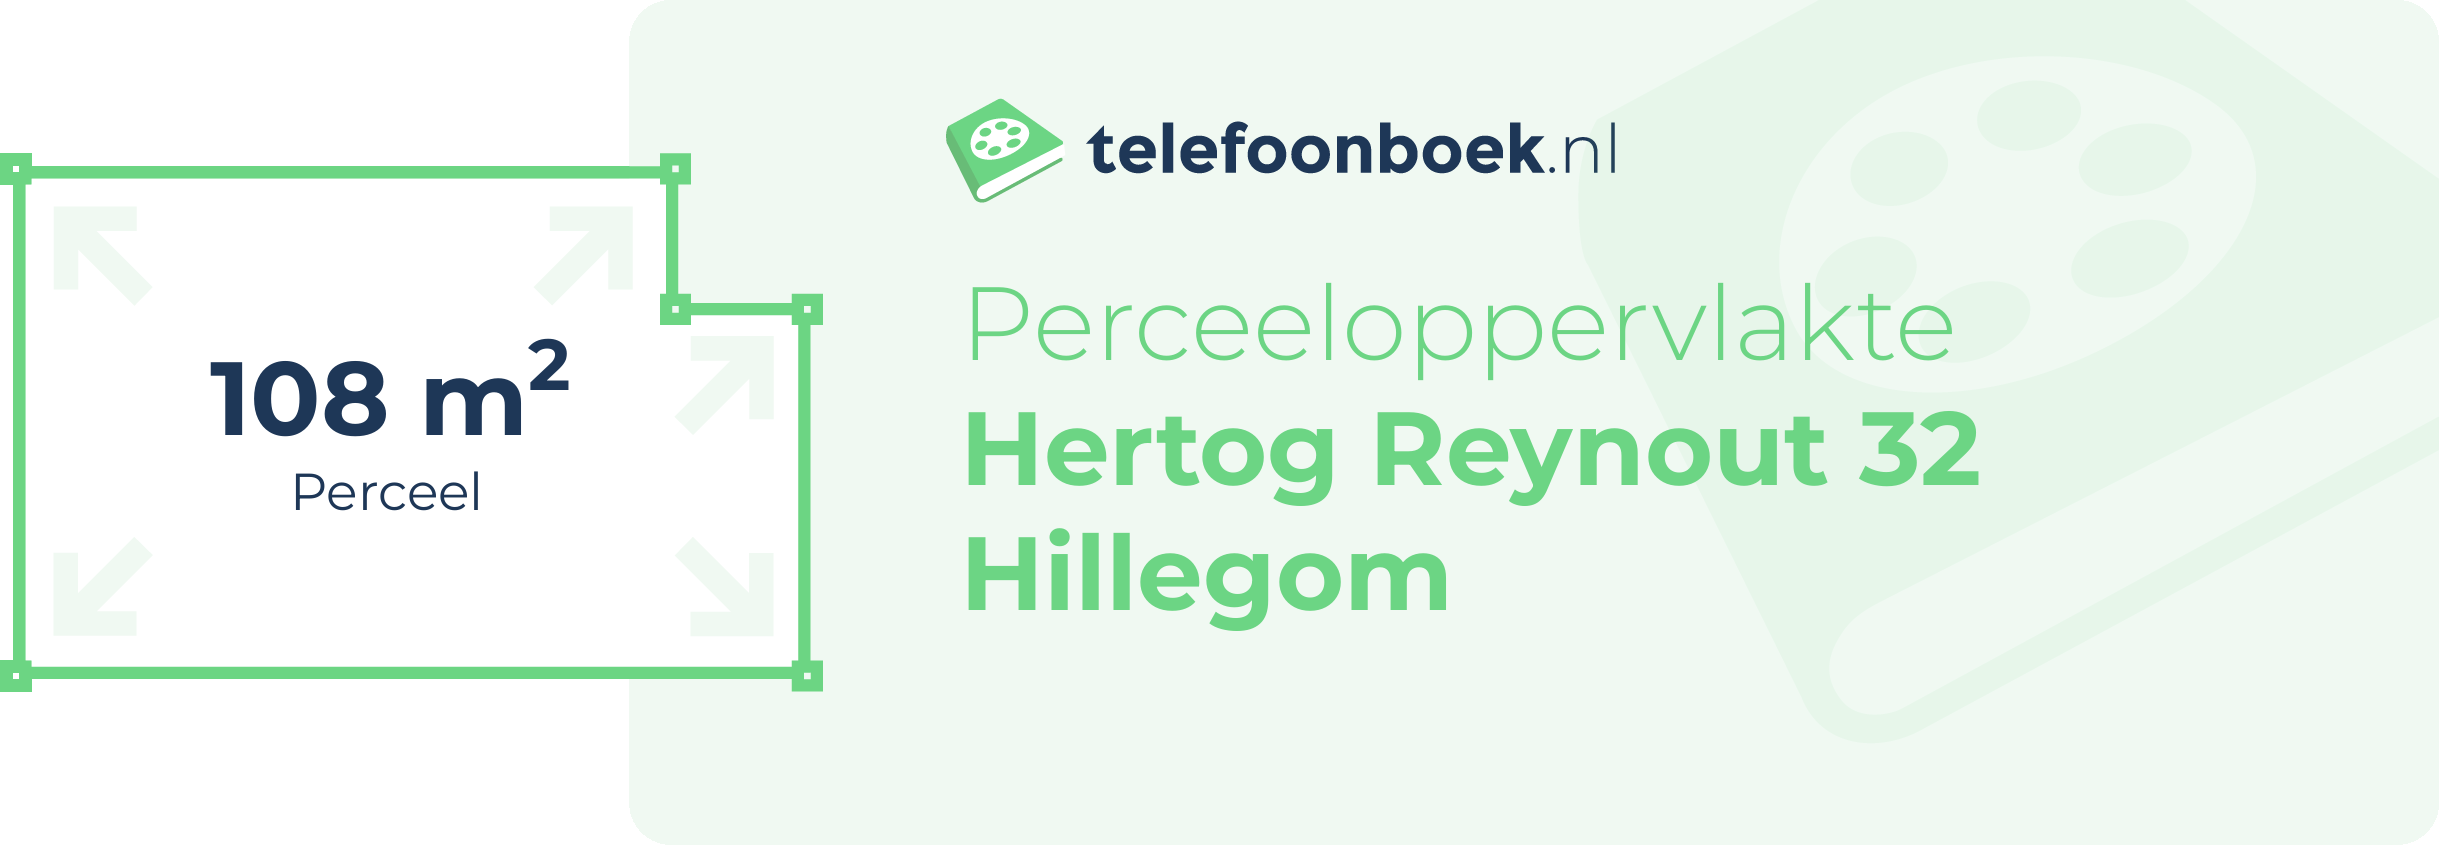 Perceeloppervlakte Hertog Reynout 32 Hillegom